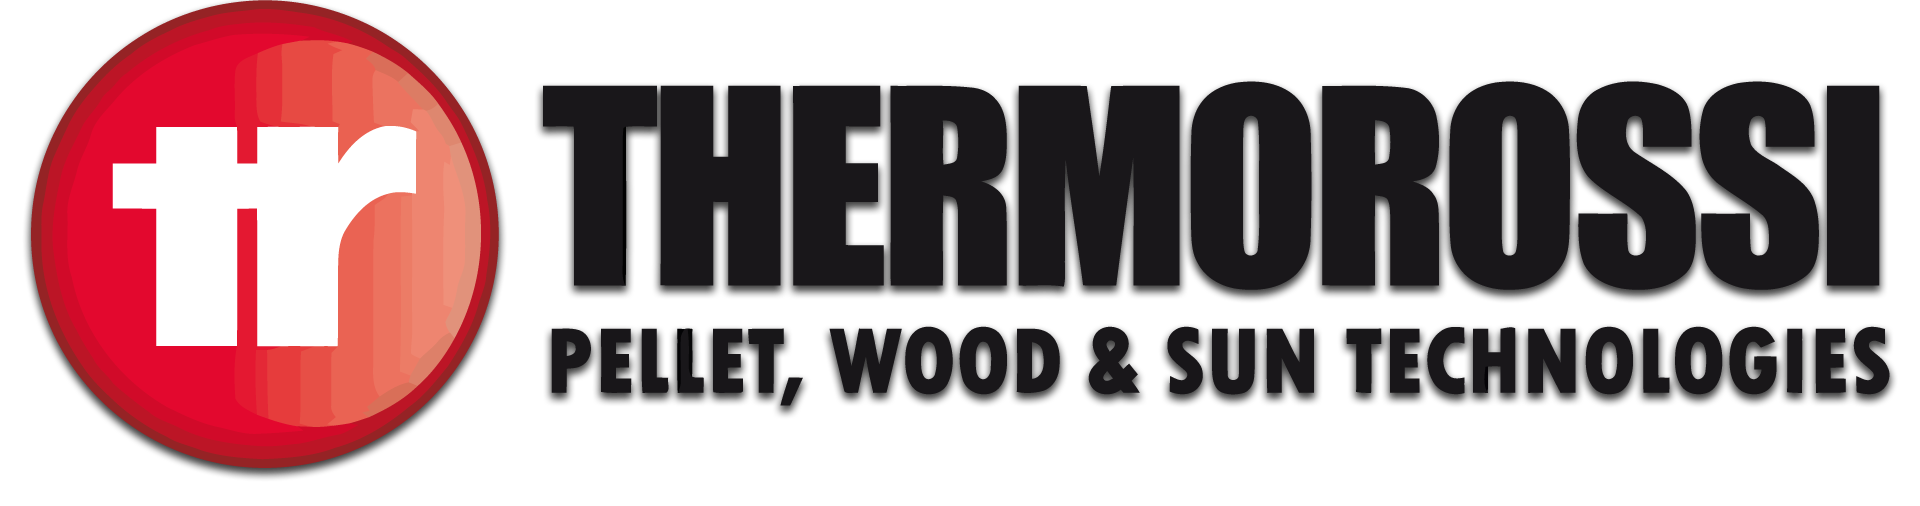 thermorossi logo